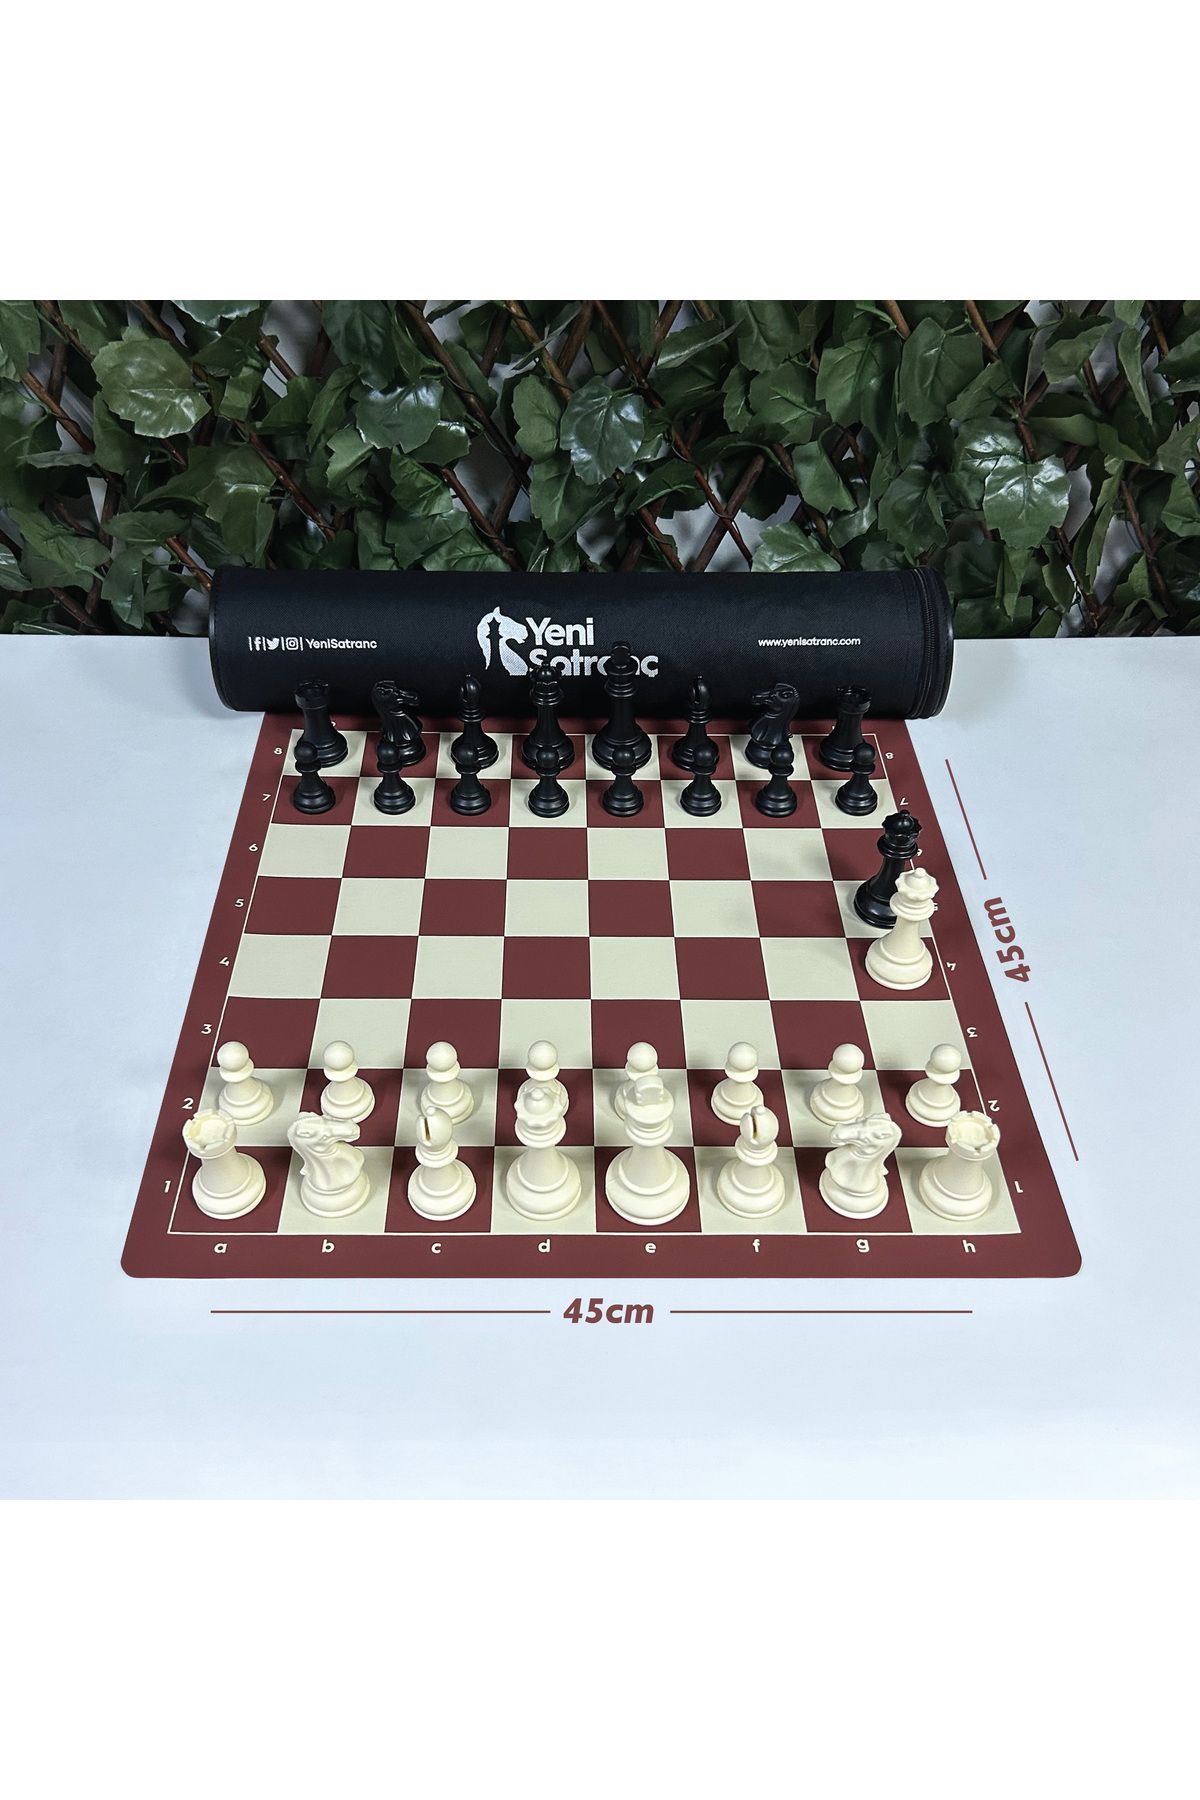 Yeni Satranç Profesyonel Satranç Takımı (92mm - 550gr)